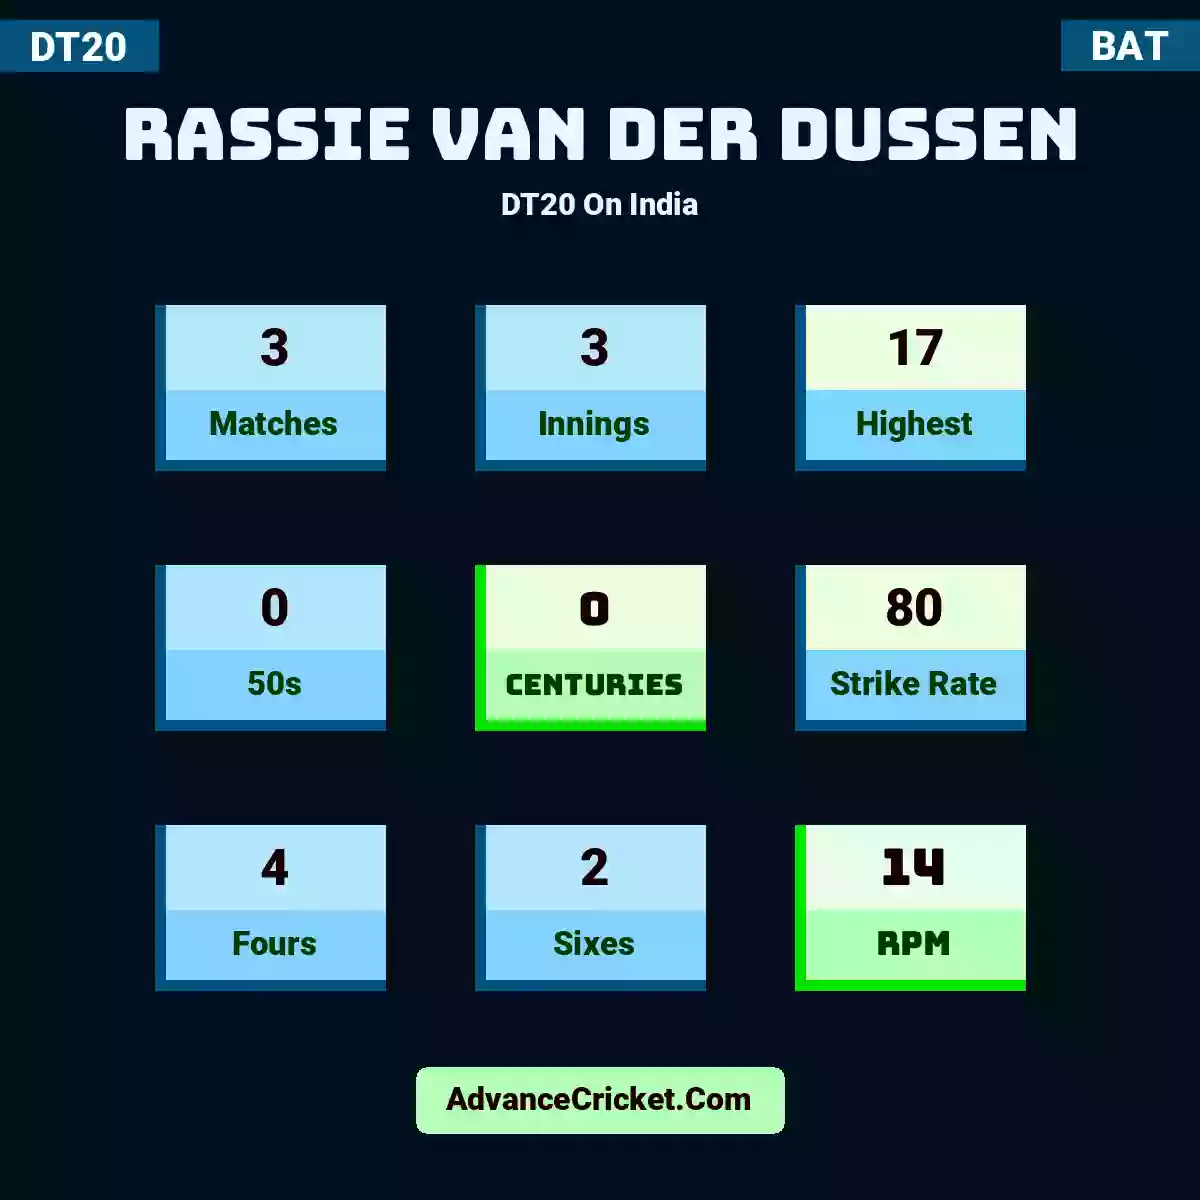 Rassie van der Dussen DT20  On India, Rassie van der Dussen played 3 matches, scored 17 runs as highest, 0 half-centuries, and 0 centuries, with a strike rate of 80. R.Dussen hit 4 fours and 2 sixes, with an RPM of 14.